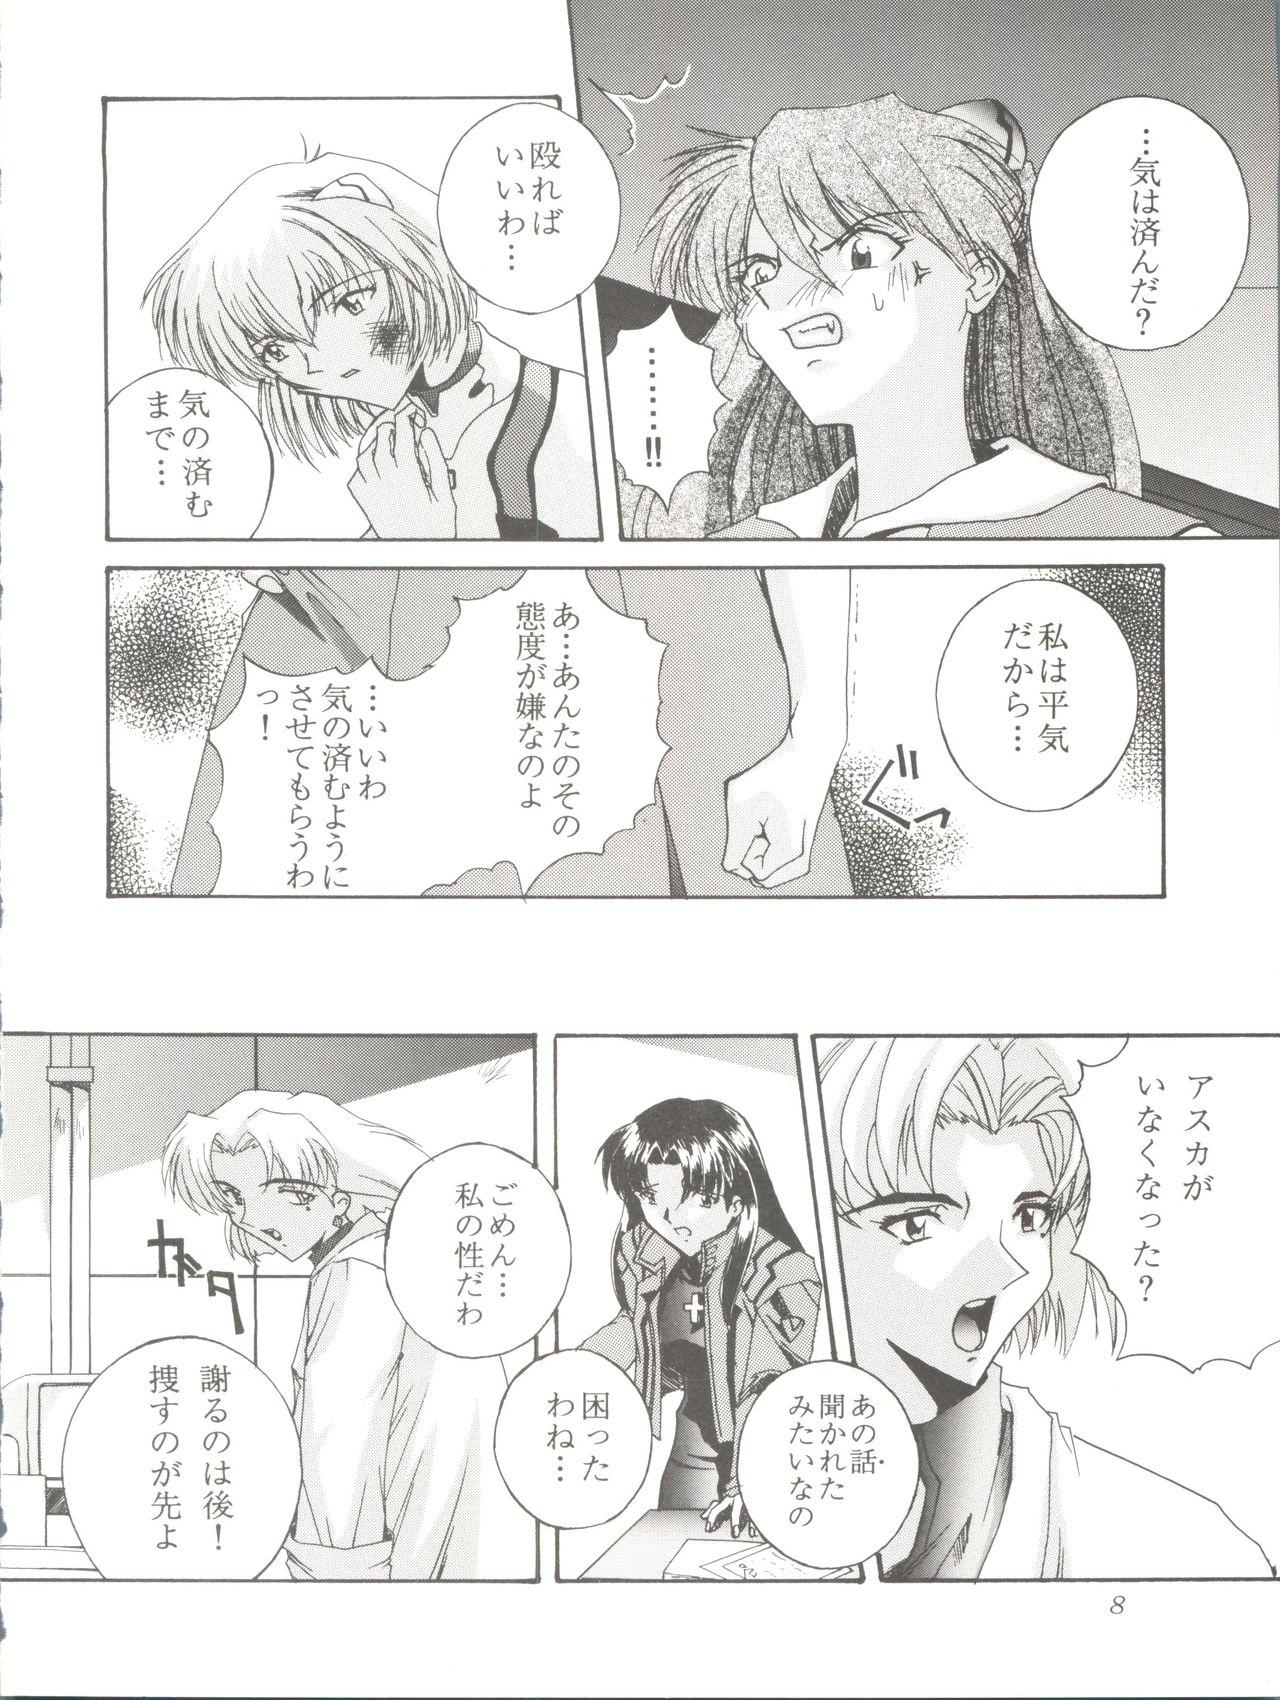 Stranger Habat coy 14 - Neon genesis evangelion Mahou tsukai tai Shamanic princess Kitchen - Page 8